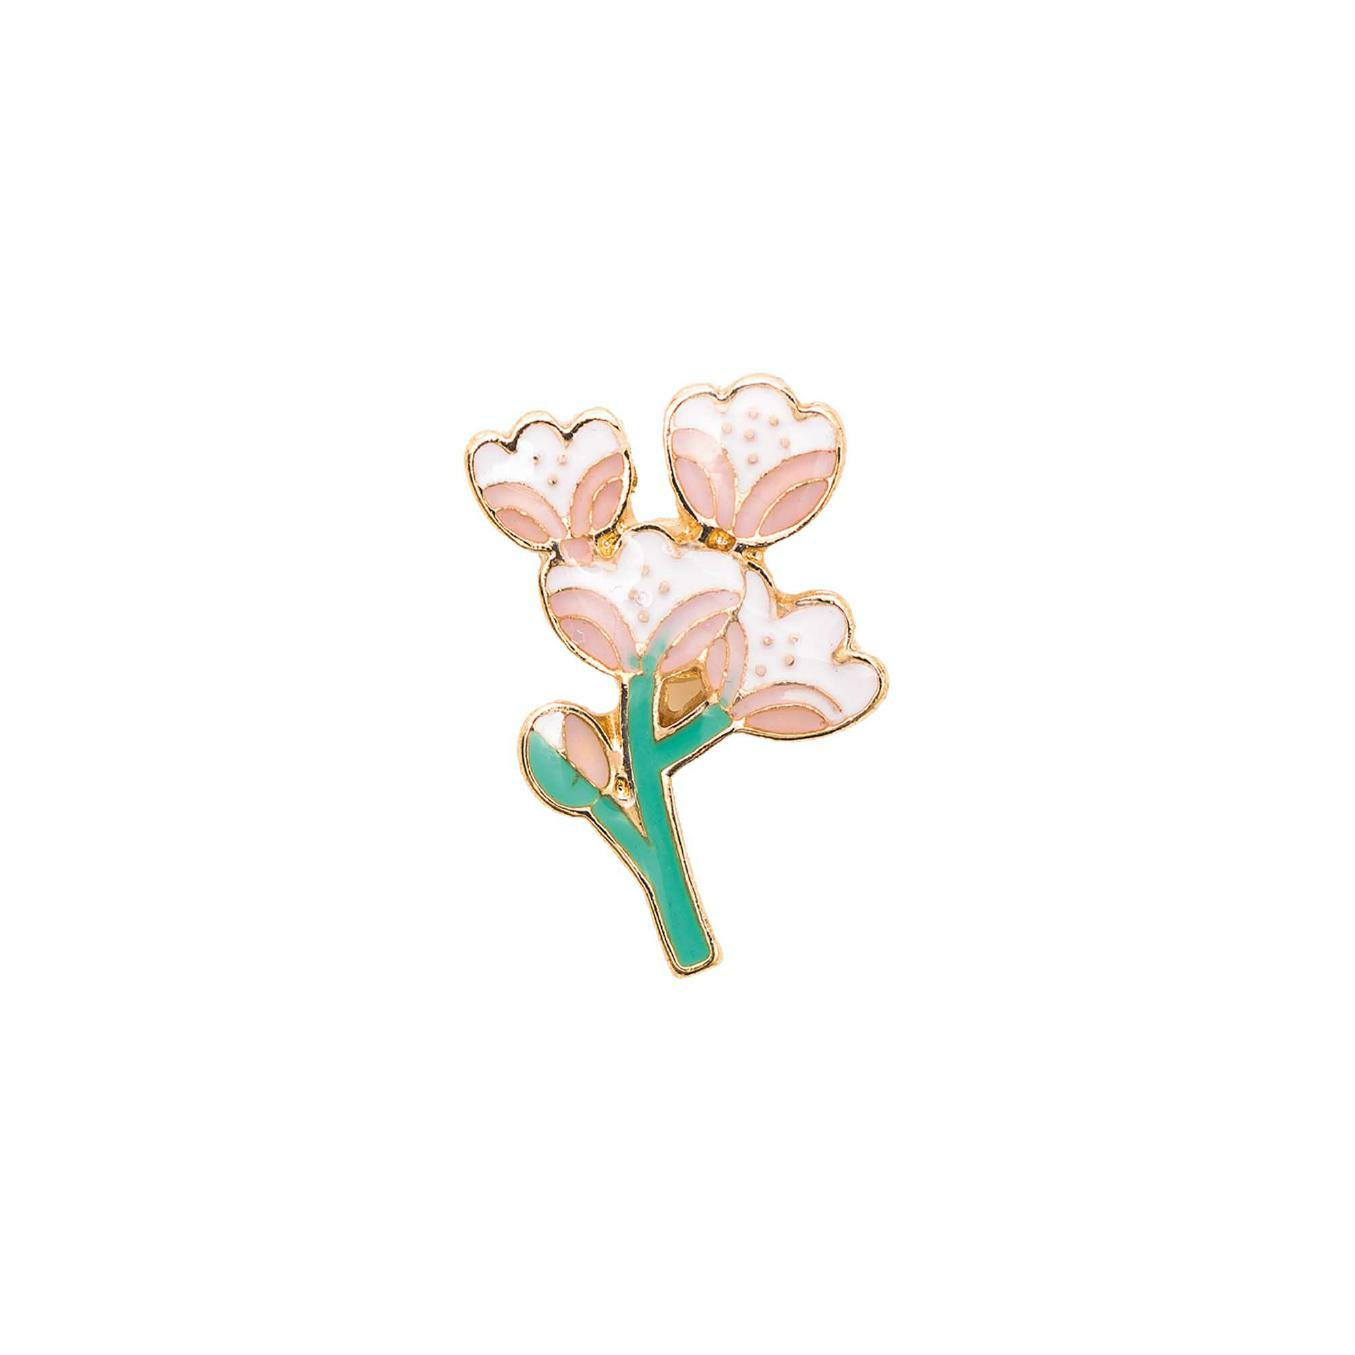 Bild: rico - Emailbrosche/Pin - "Cherry Blossom" - 12x18